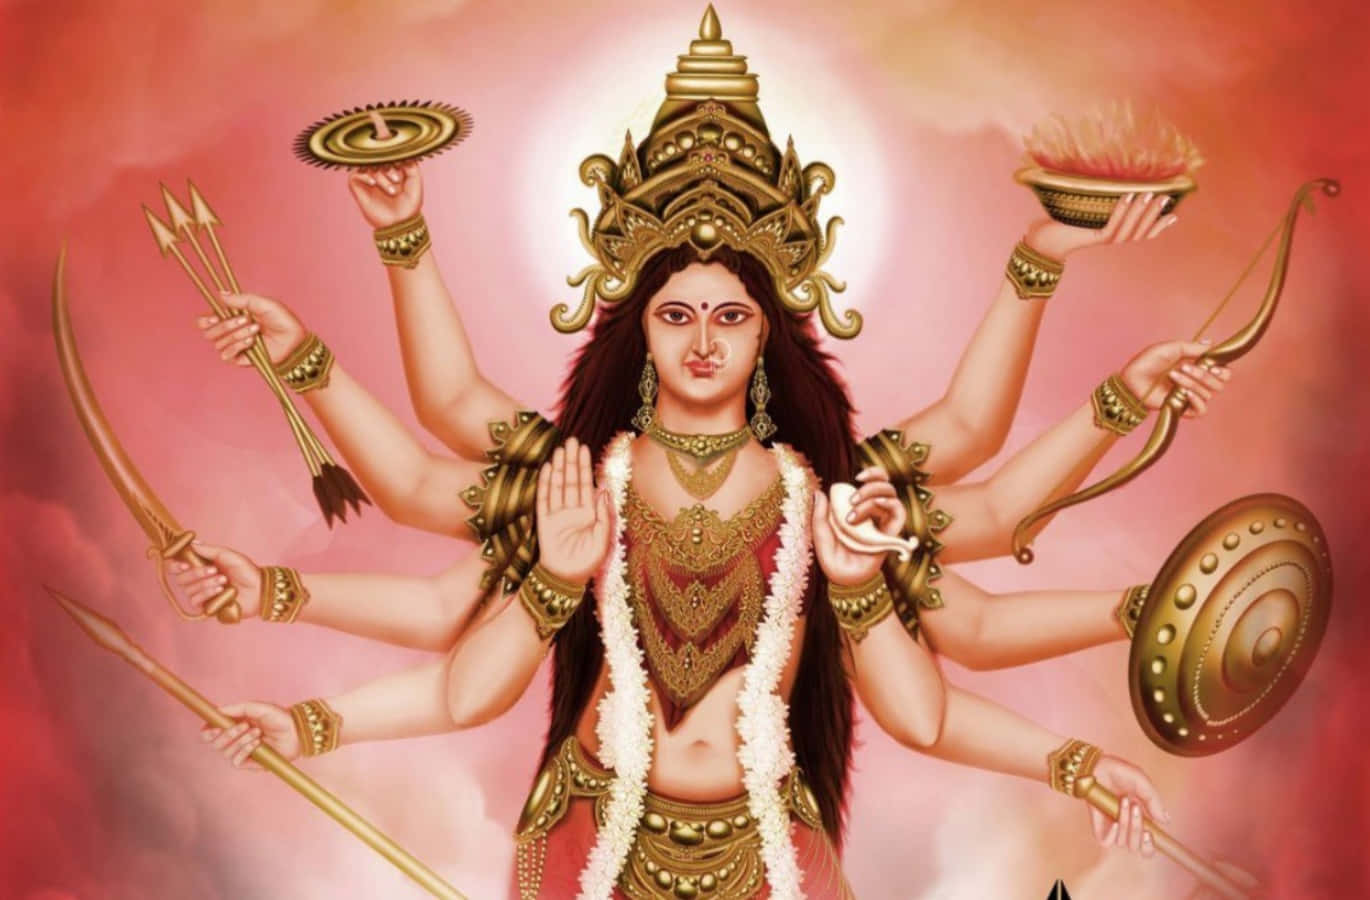 Divine Portrait of Goddess Durga Maa